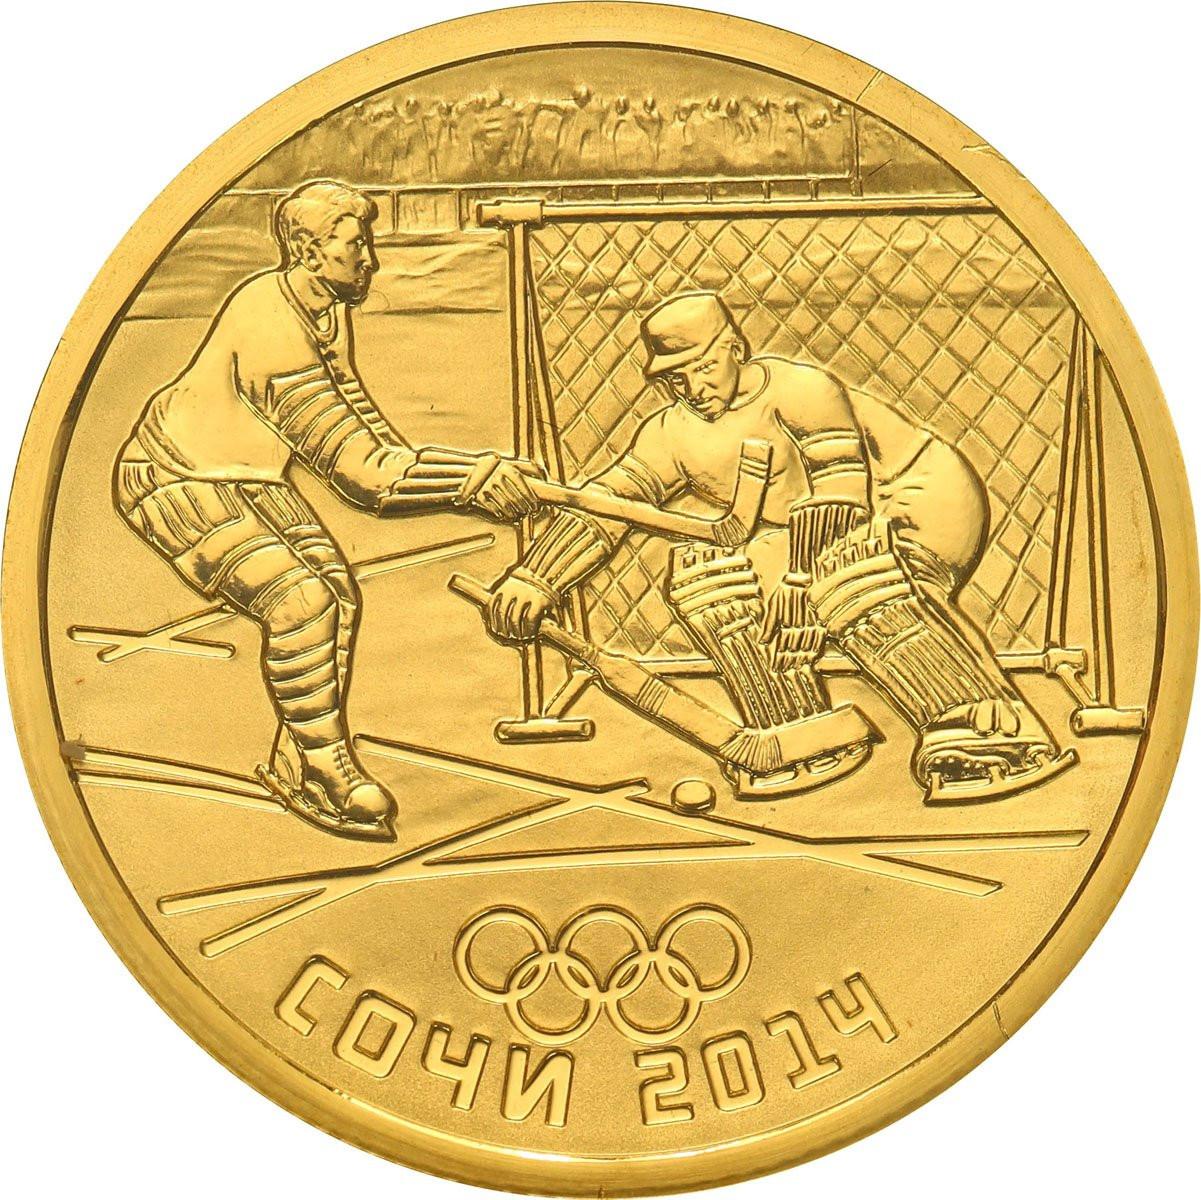 Rosja. 50 Rubli 2014 Olimpiada Soczi - Mecz Hokeja - 1/4 uncji złota